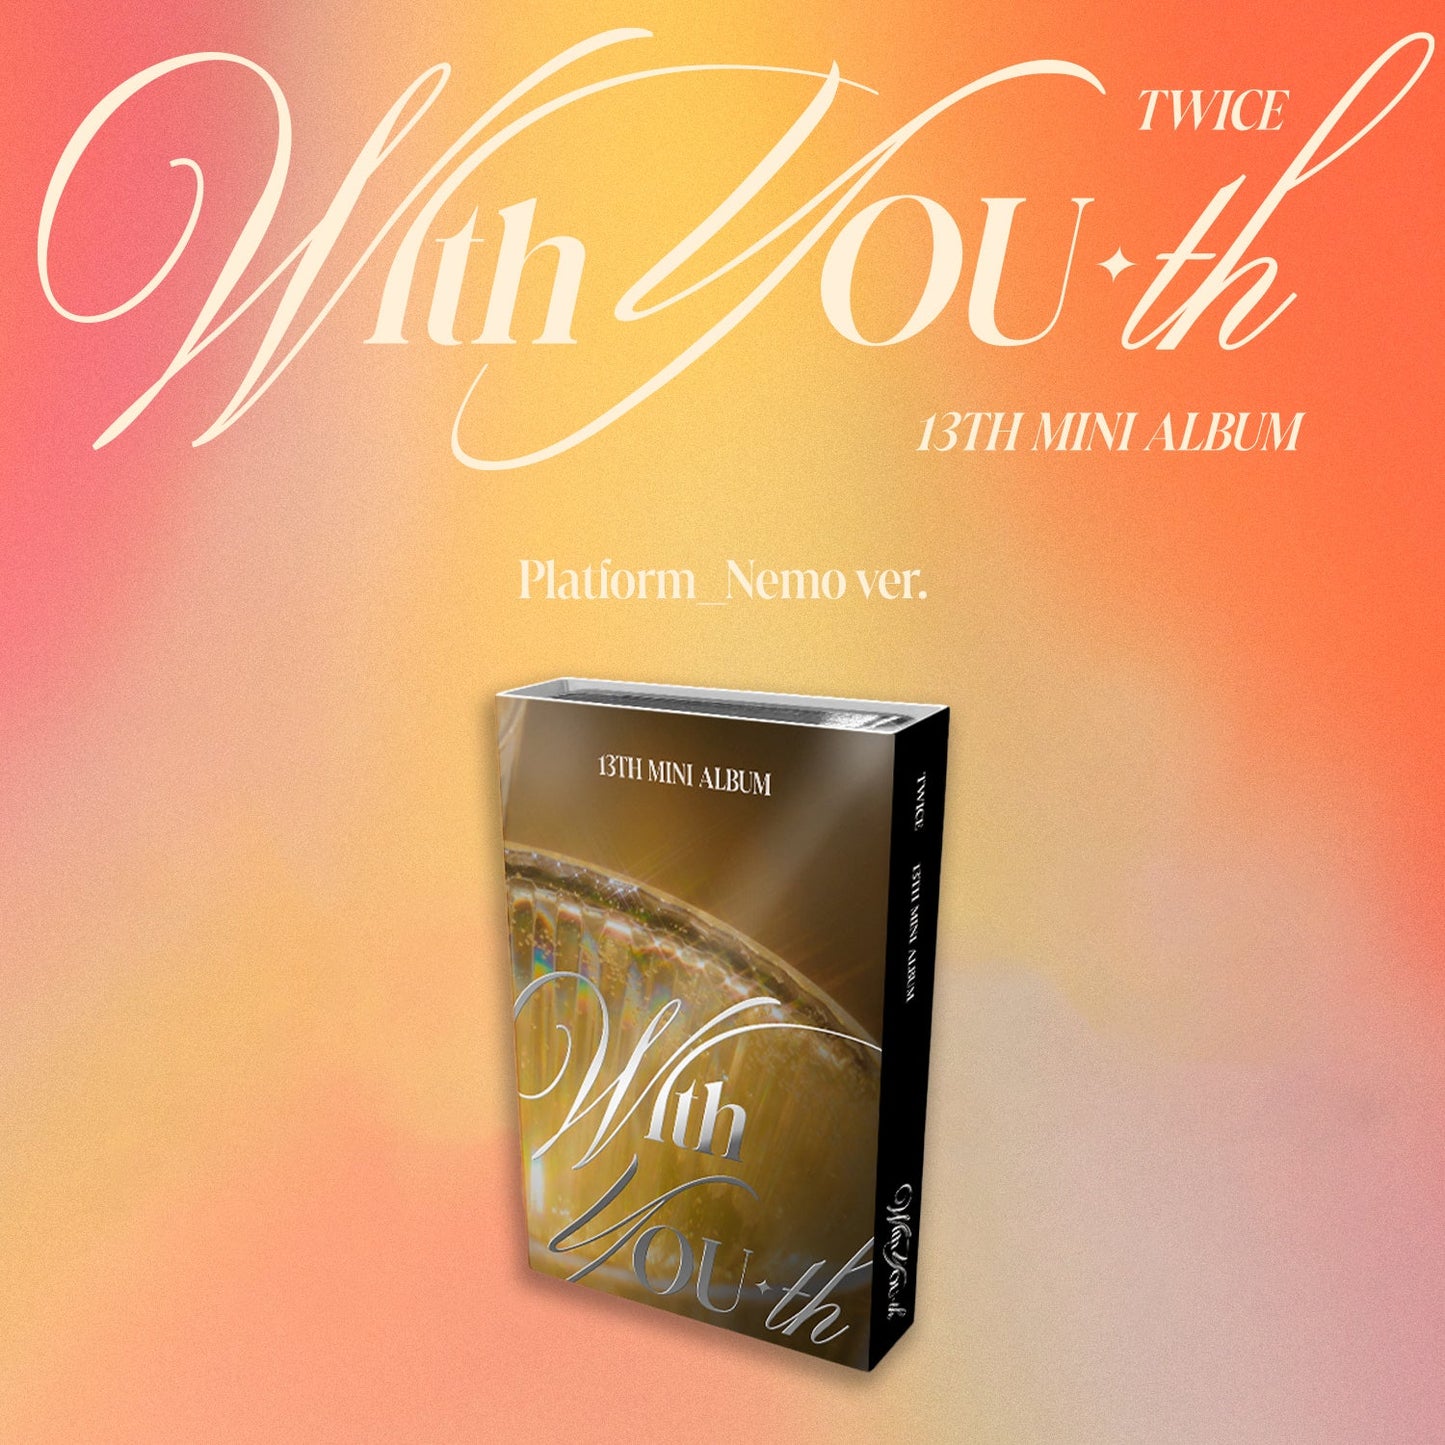 TWICE 13TH MINI ALBUM 'WITH YOU-TH' (NEMO) GLOWING VERSION COVER